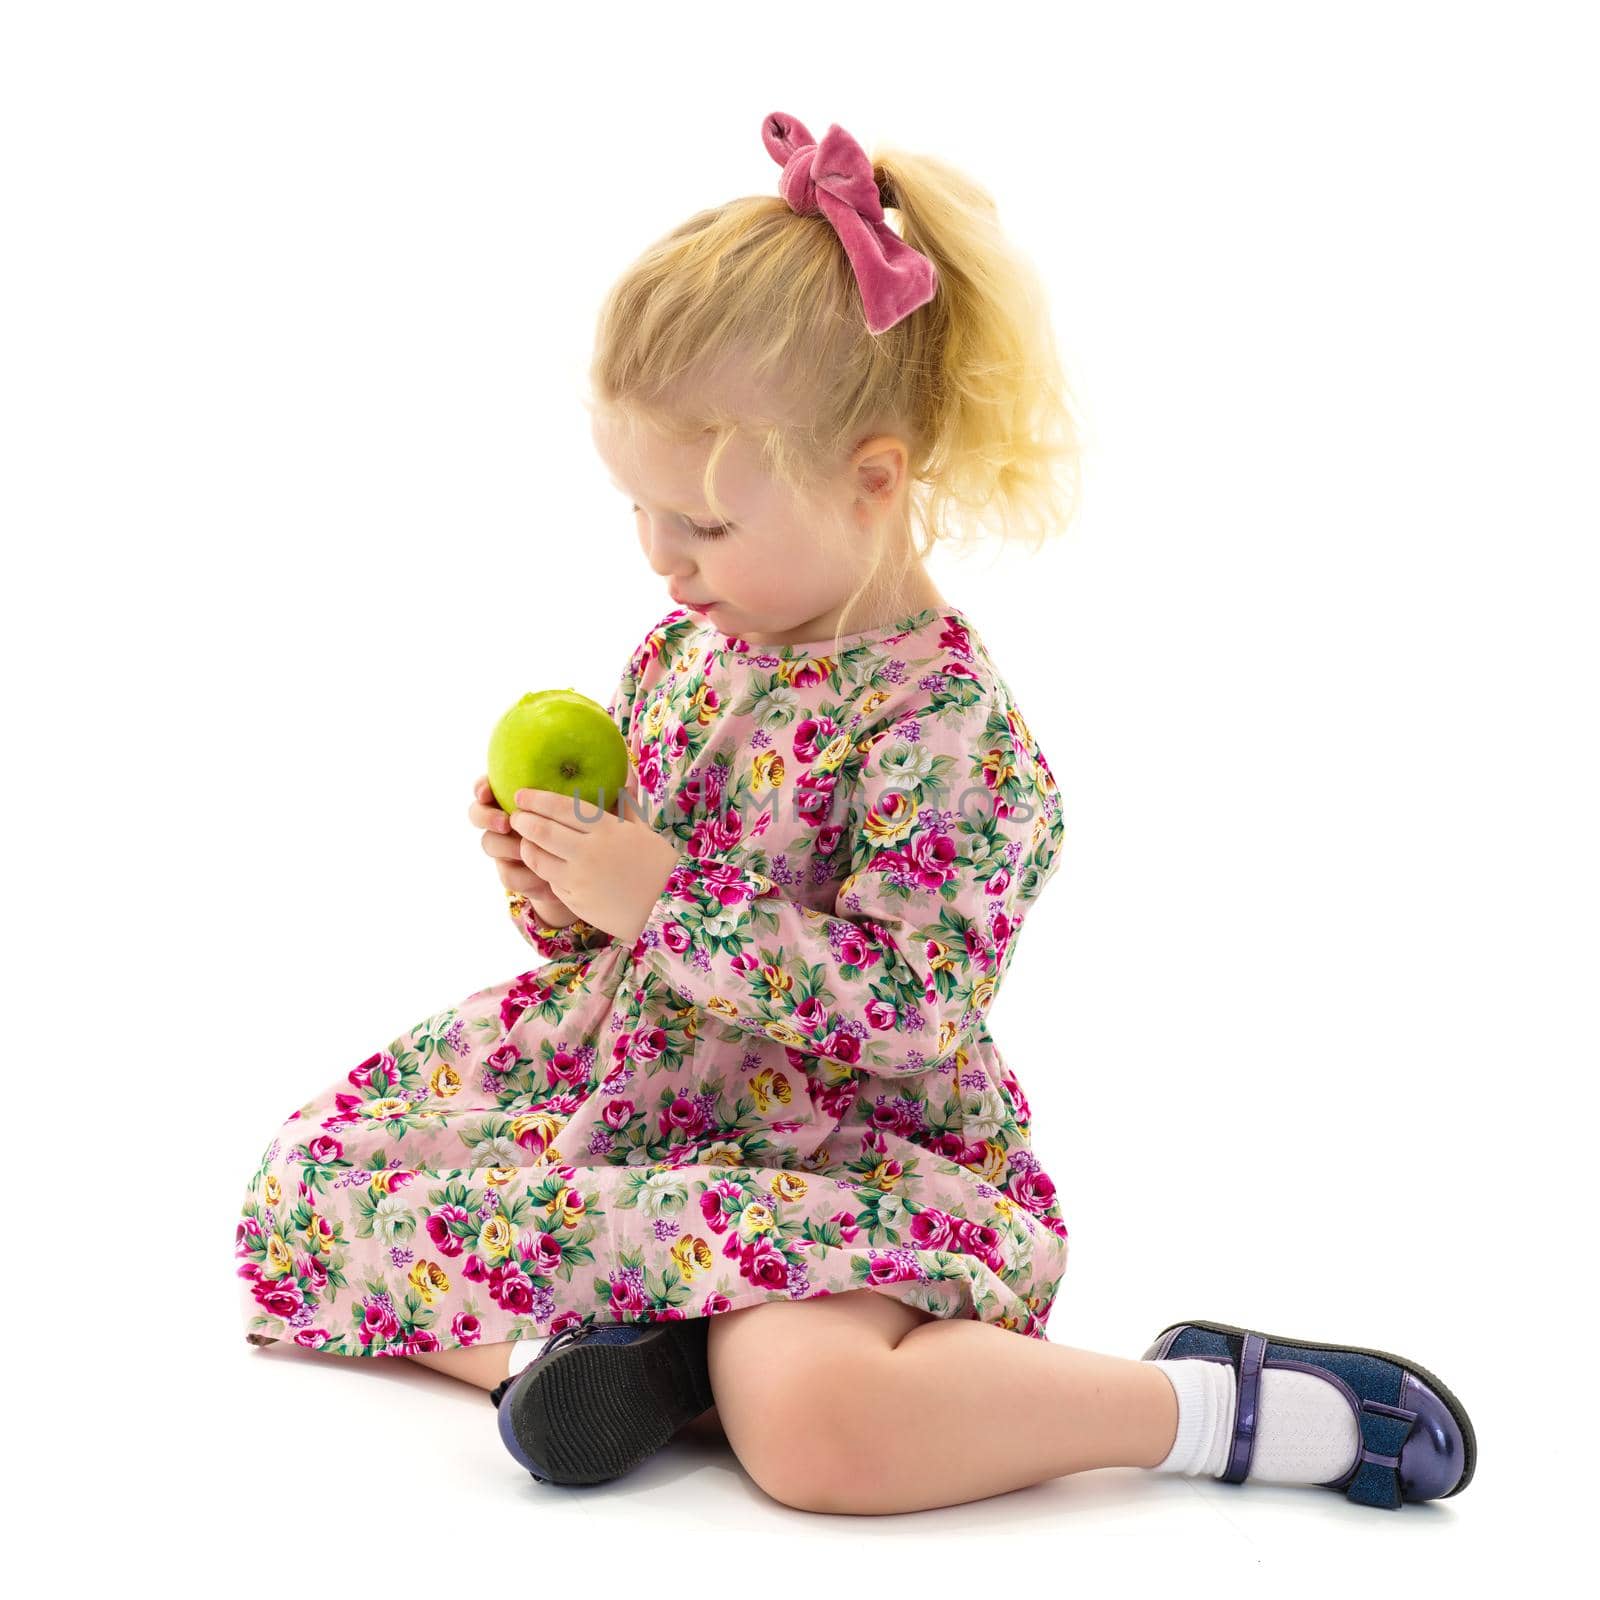 Little girl with apple by kolesnikov_studio